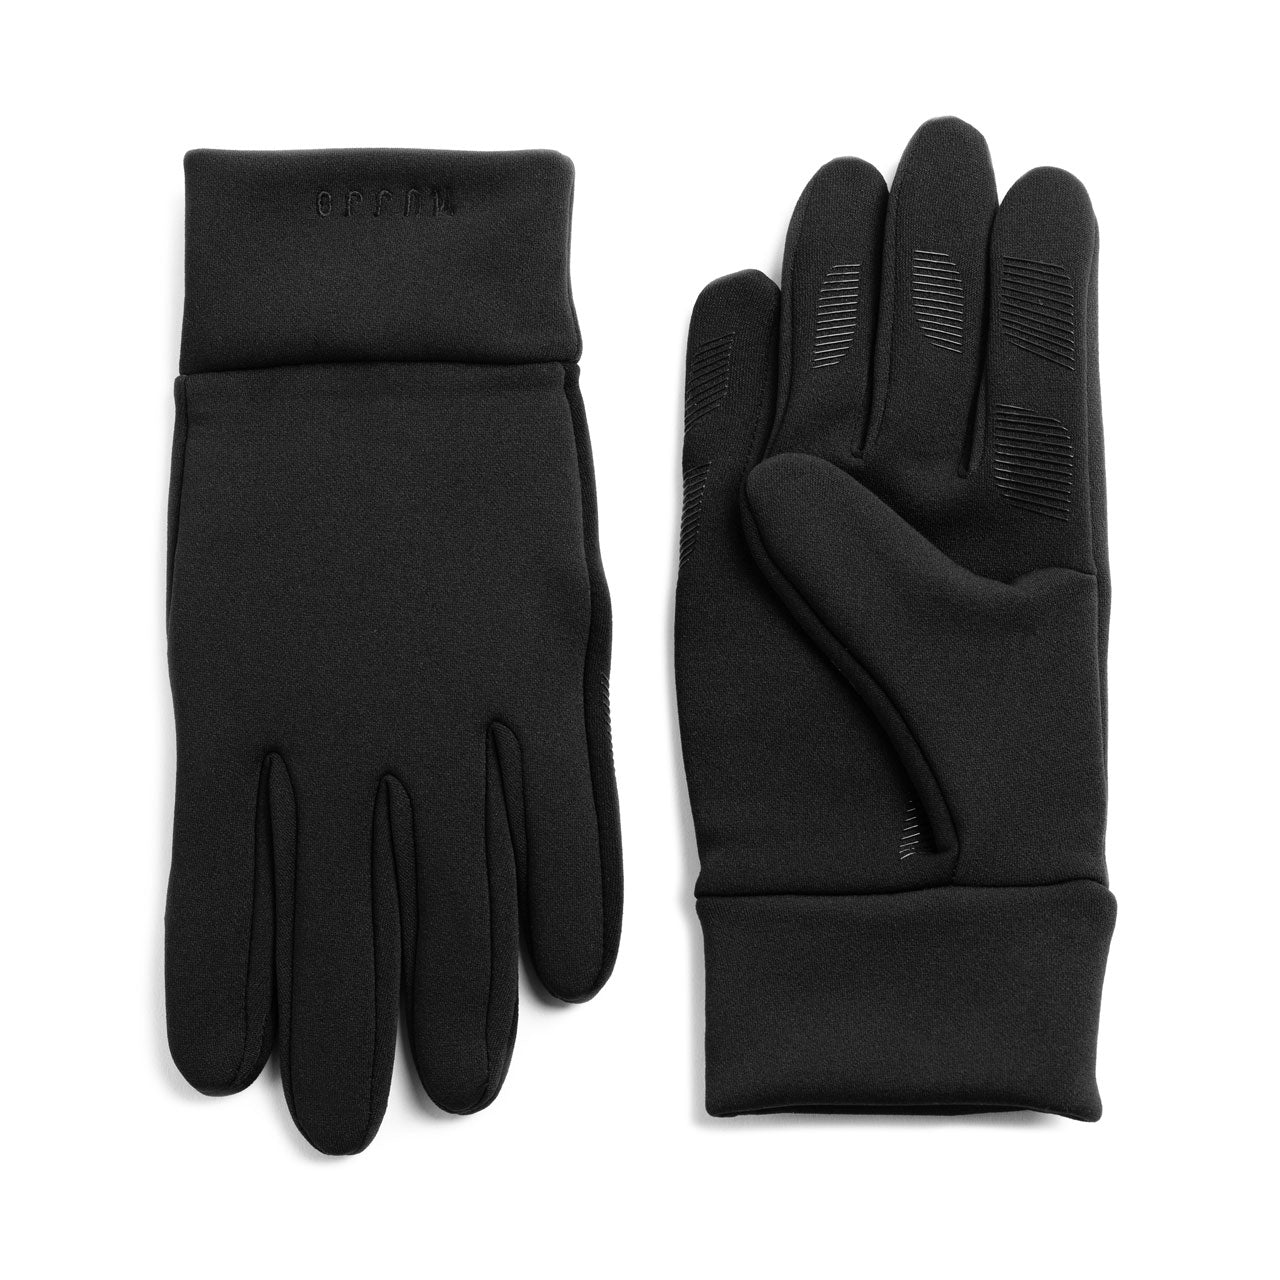 Mujjo Knit Touchscreen Gloves